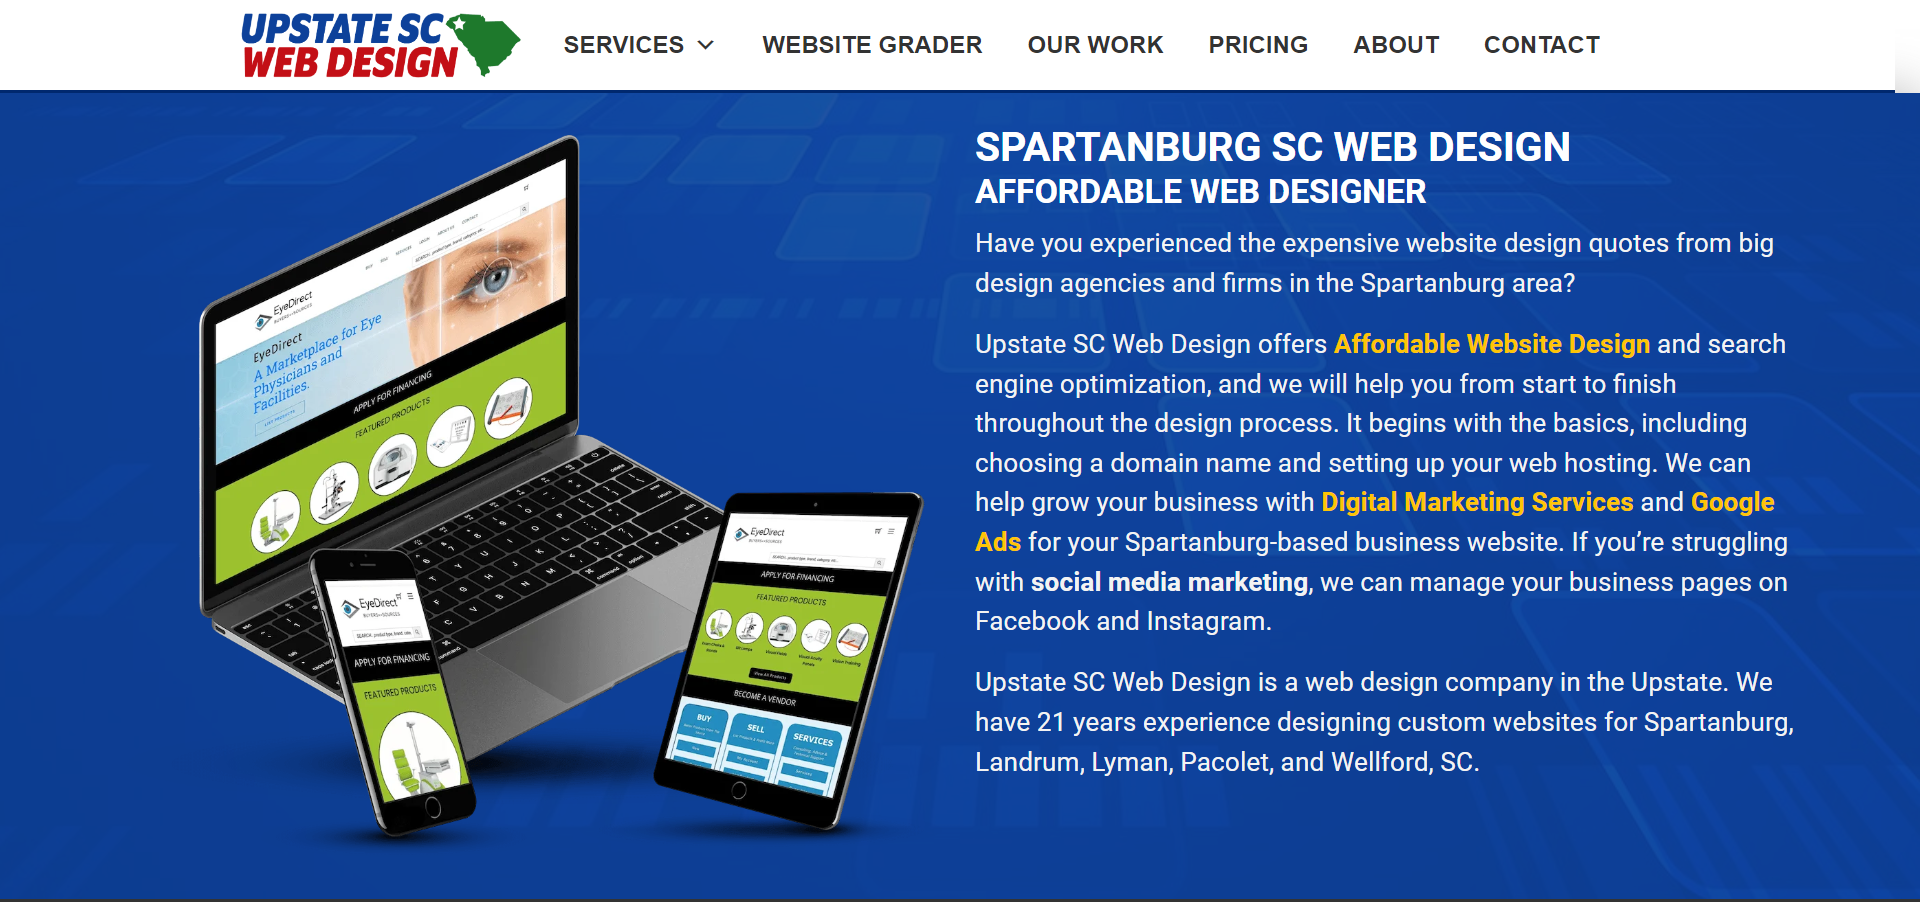 UPSTATE SC WEB DESIGN COMPANY